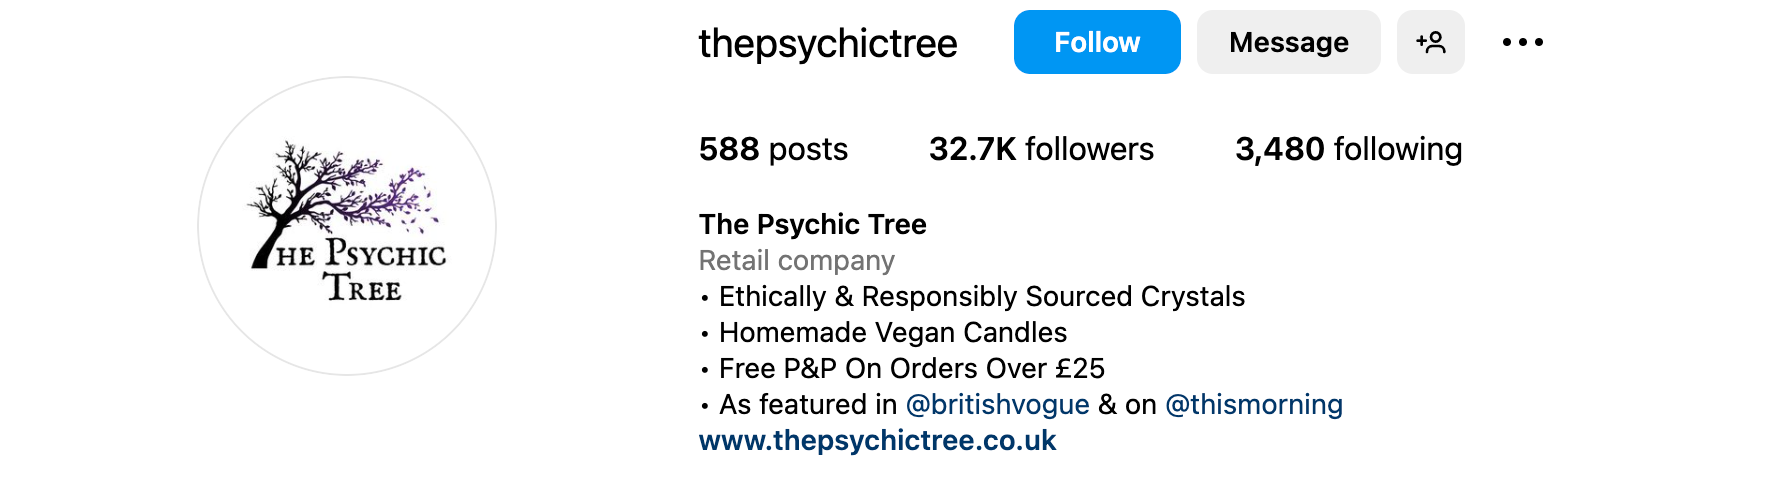 Instagram bio ideas - The Psychic Tree